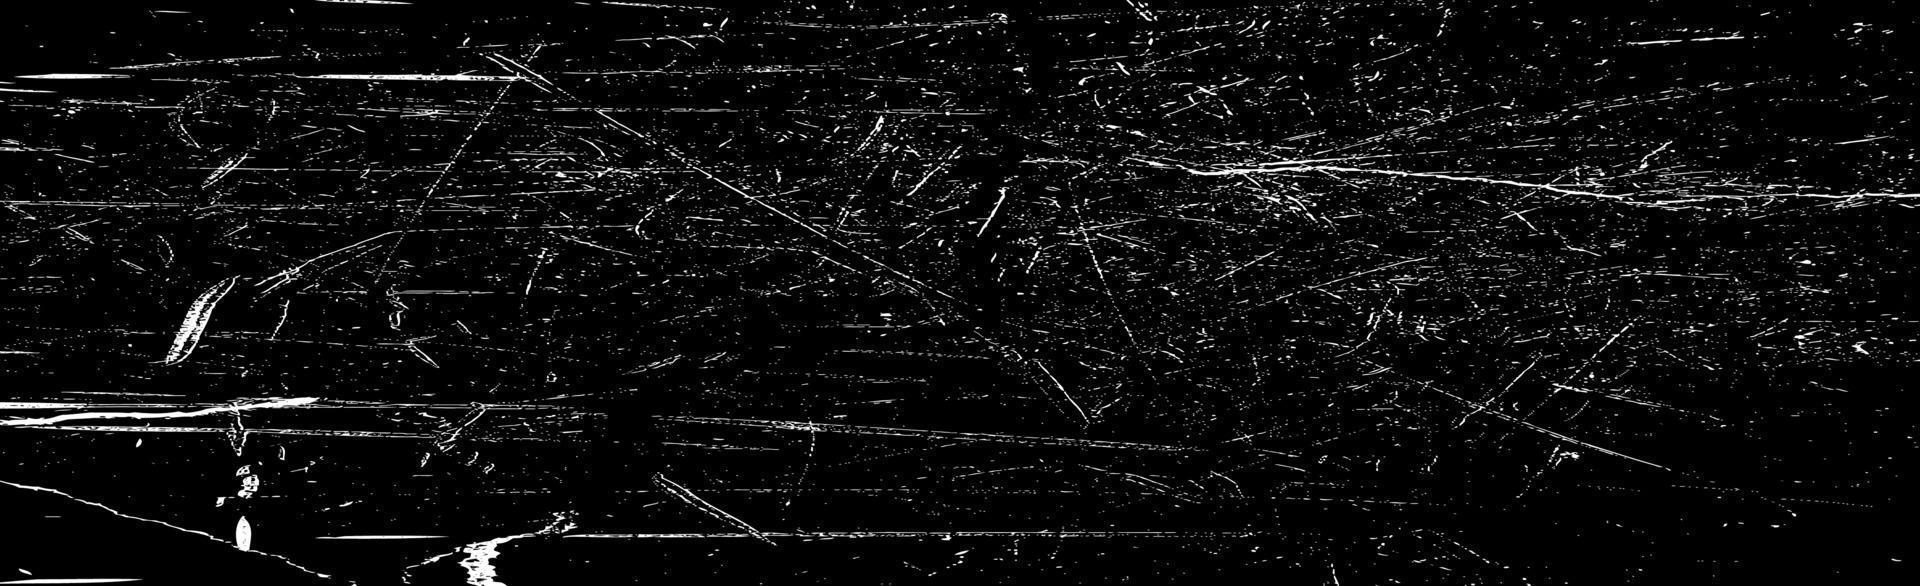 un montón de salpicaduras blancas sobre un fondo panorámico negro - vector